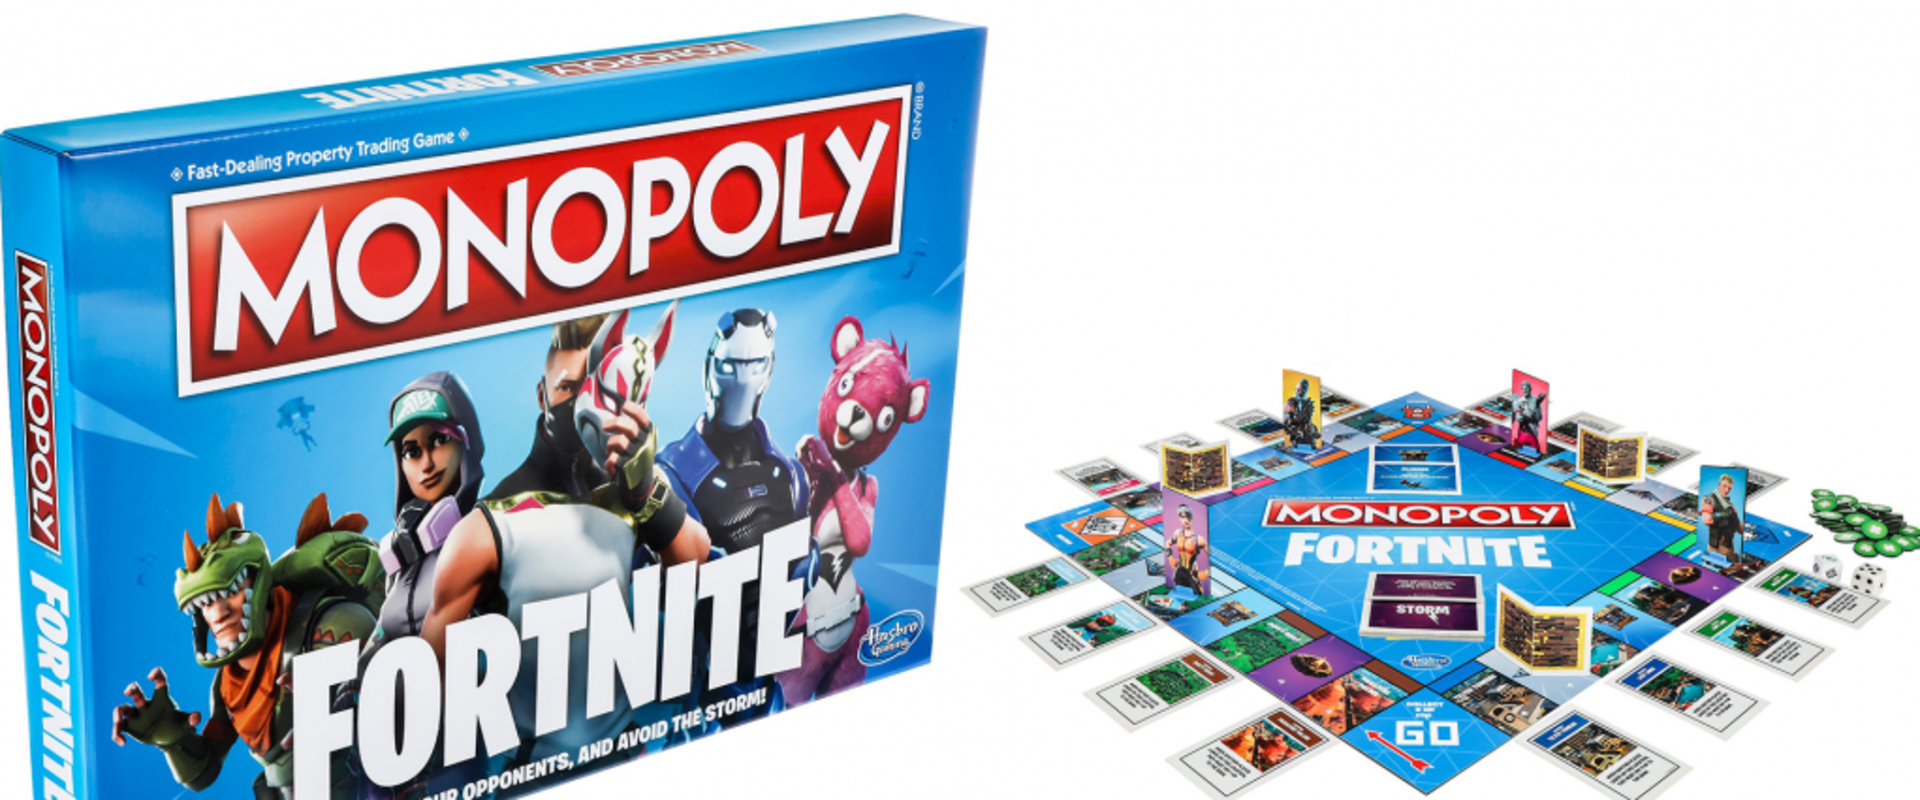 Fortnite-os Monopoly-t és Nerf fegyvereket jelentett be a Hasbro